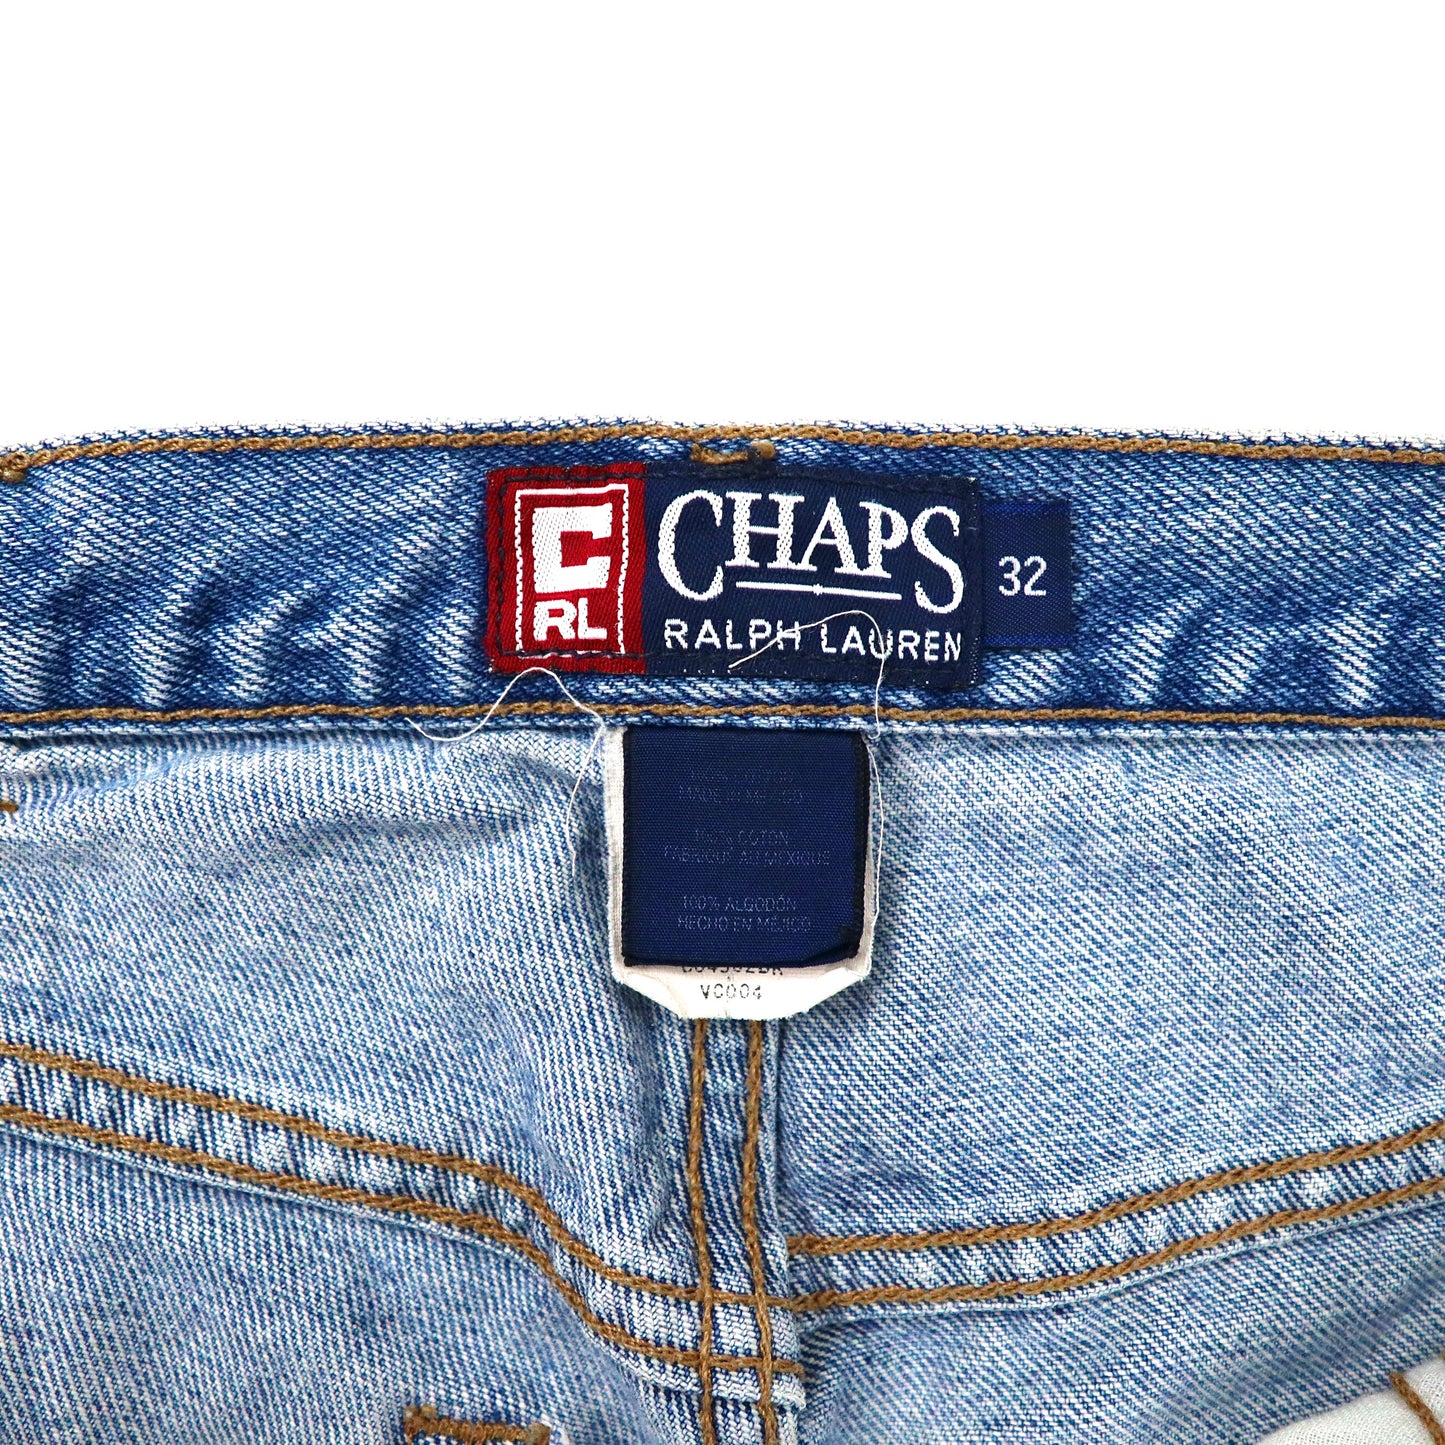 CHAPS RALPH LAUREN ハーフデニムパンツ 32 ブルー メキシコ製